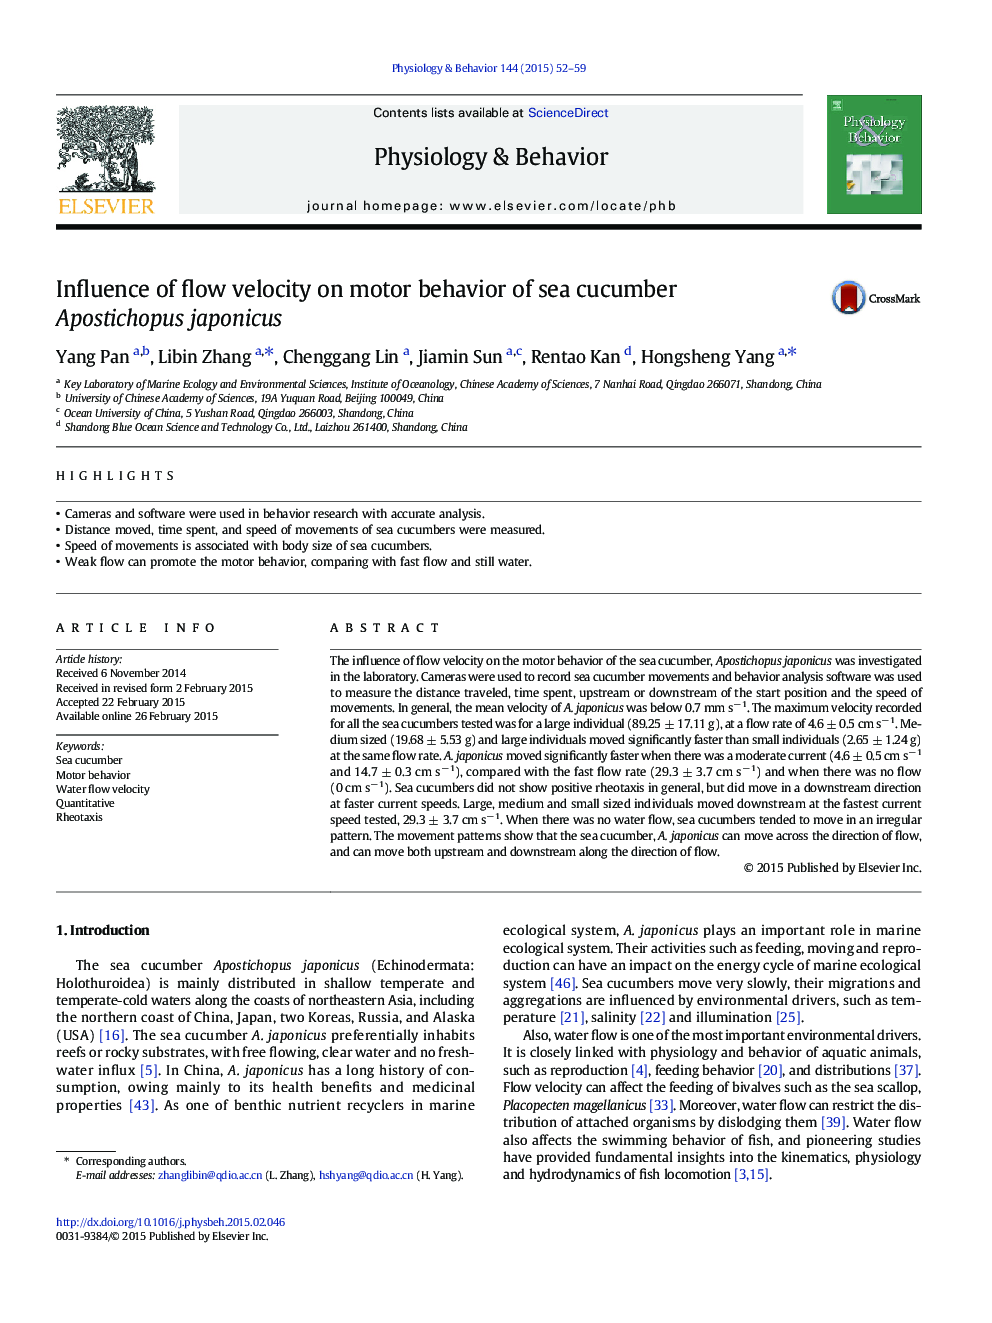 Influence of flow velocity on motor behavior of sea cucumber Apostichopus japonicus